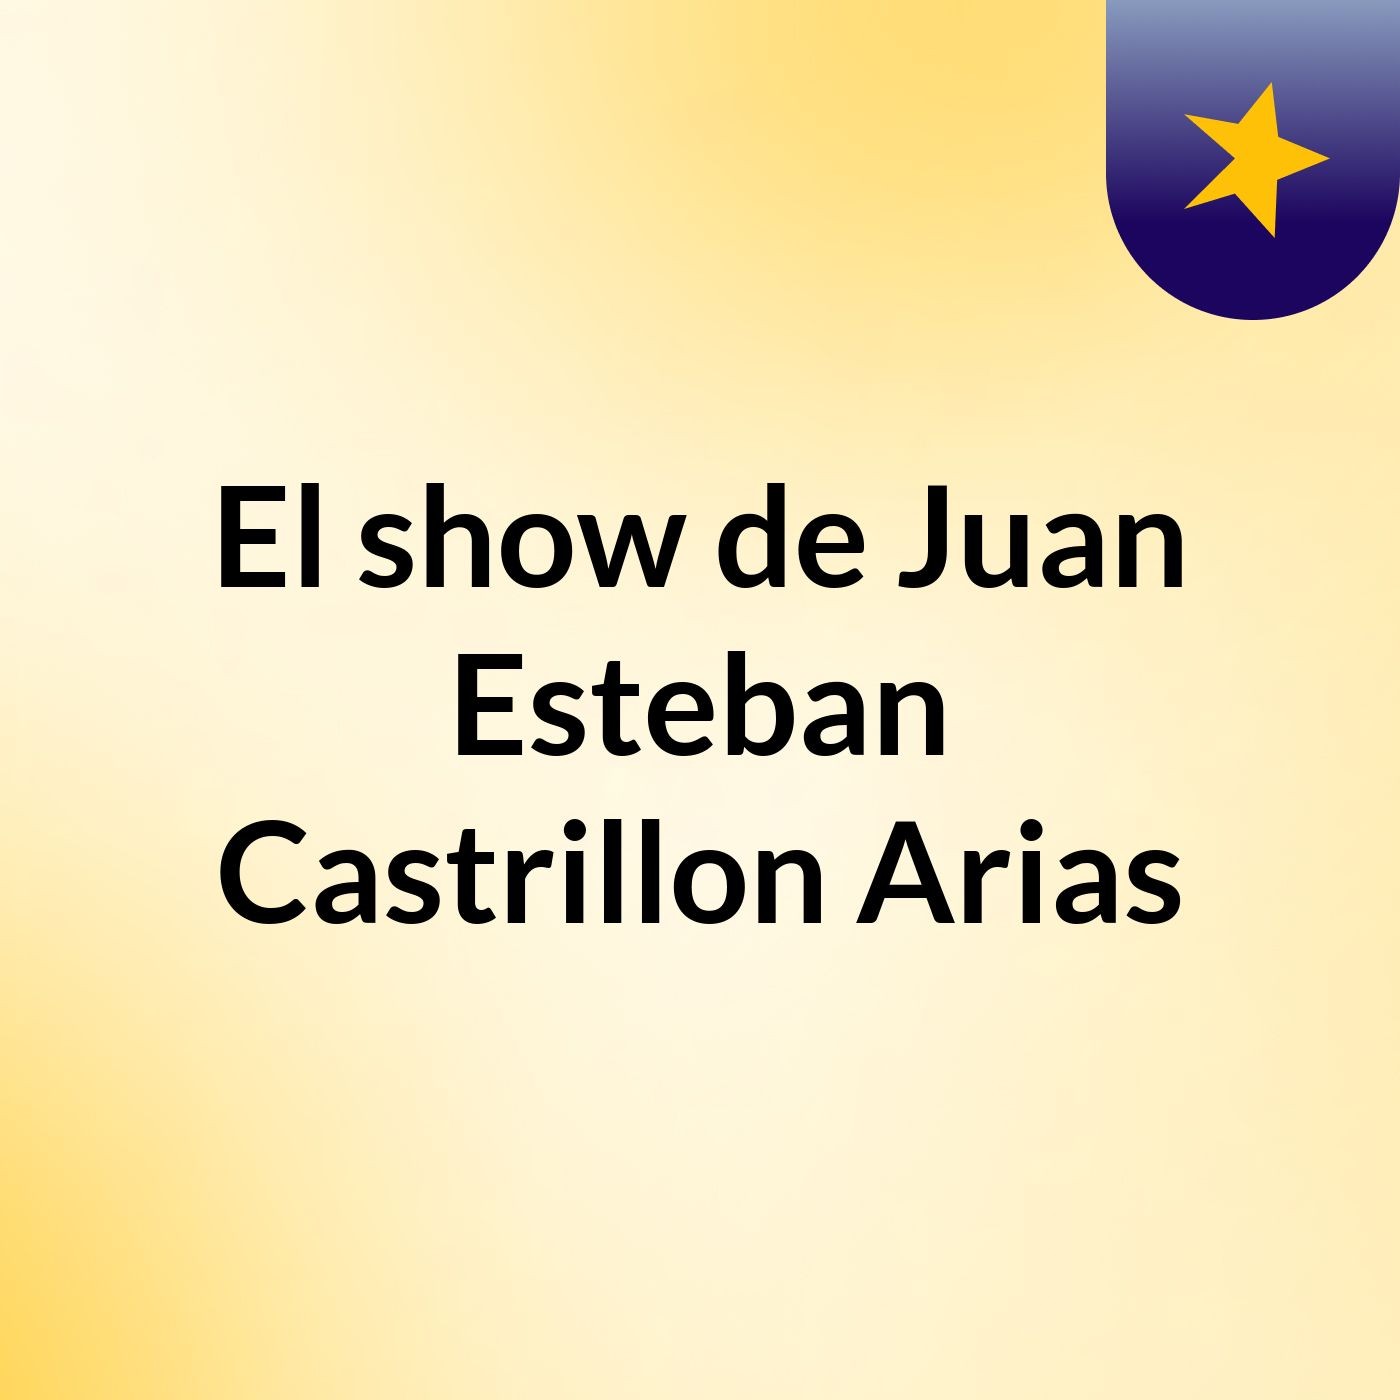 El show de Juan Esteban Castrillon Arias